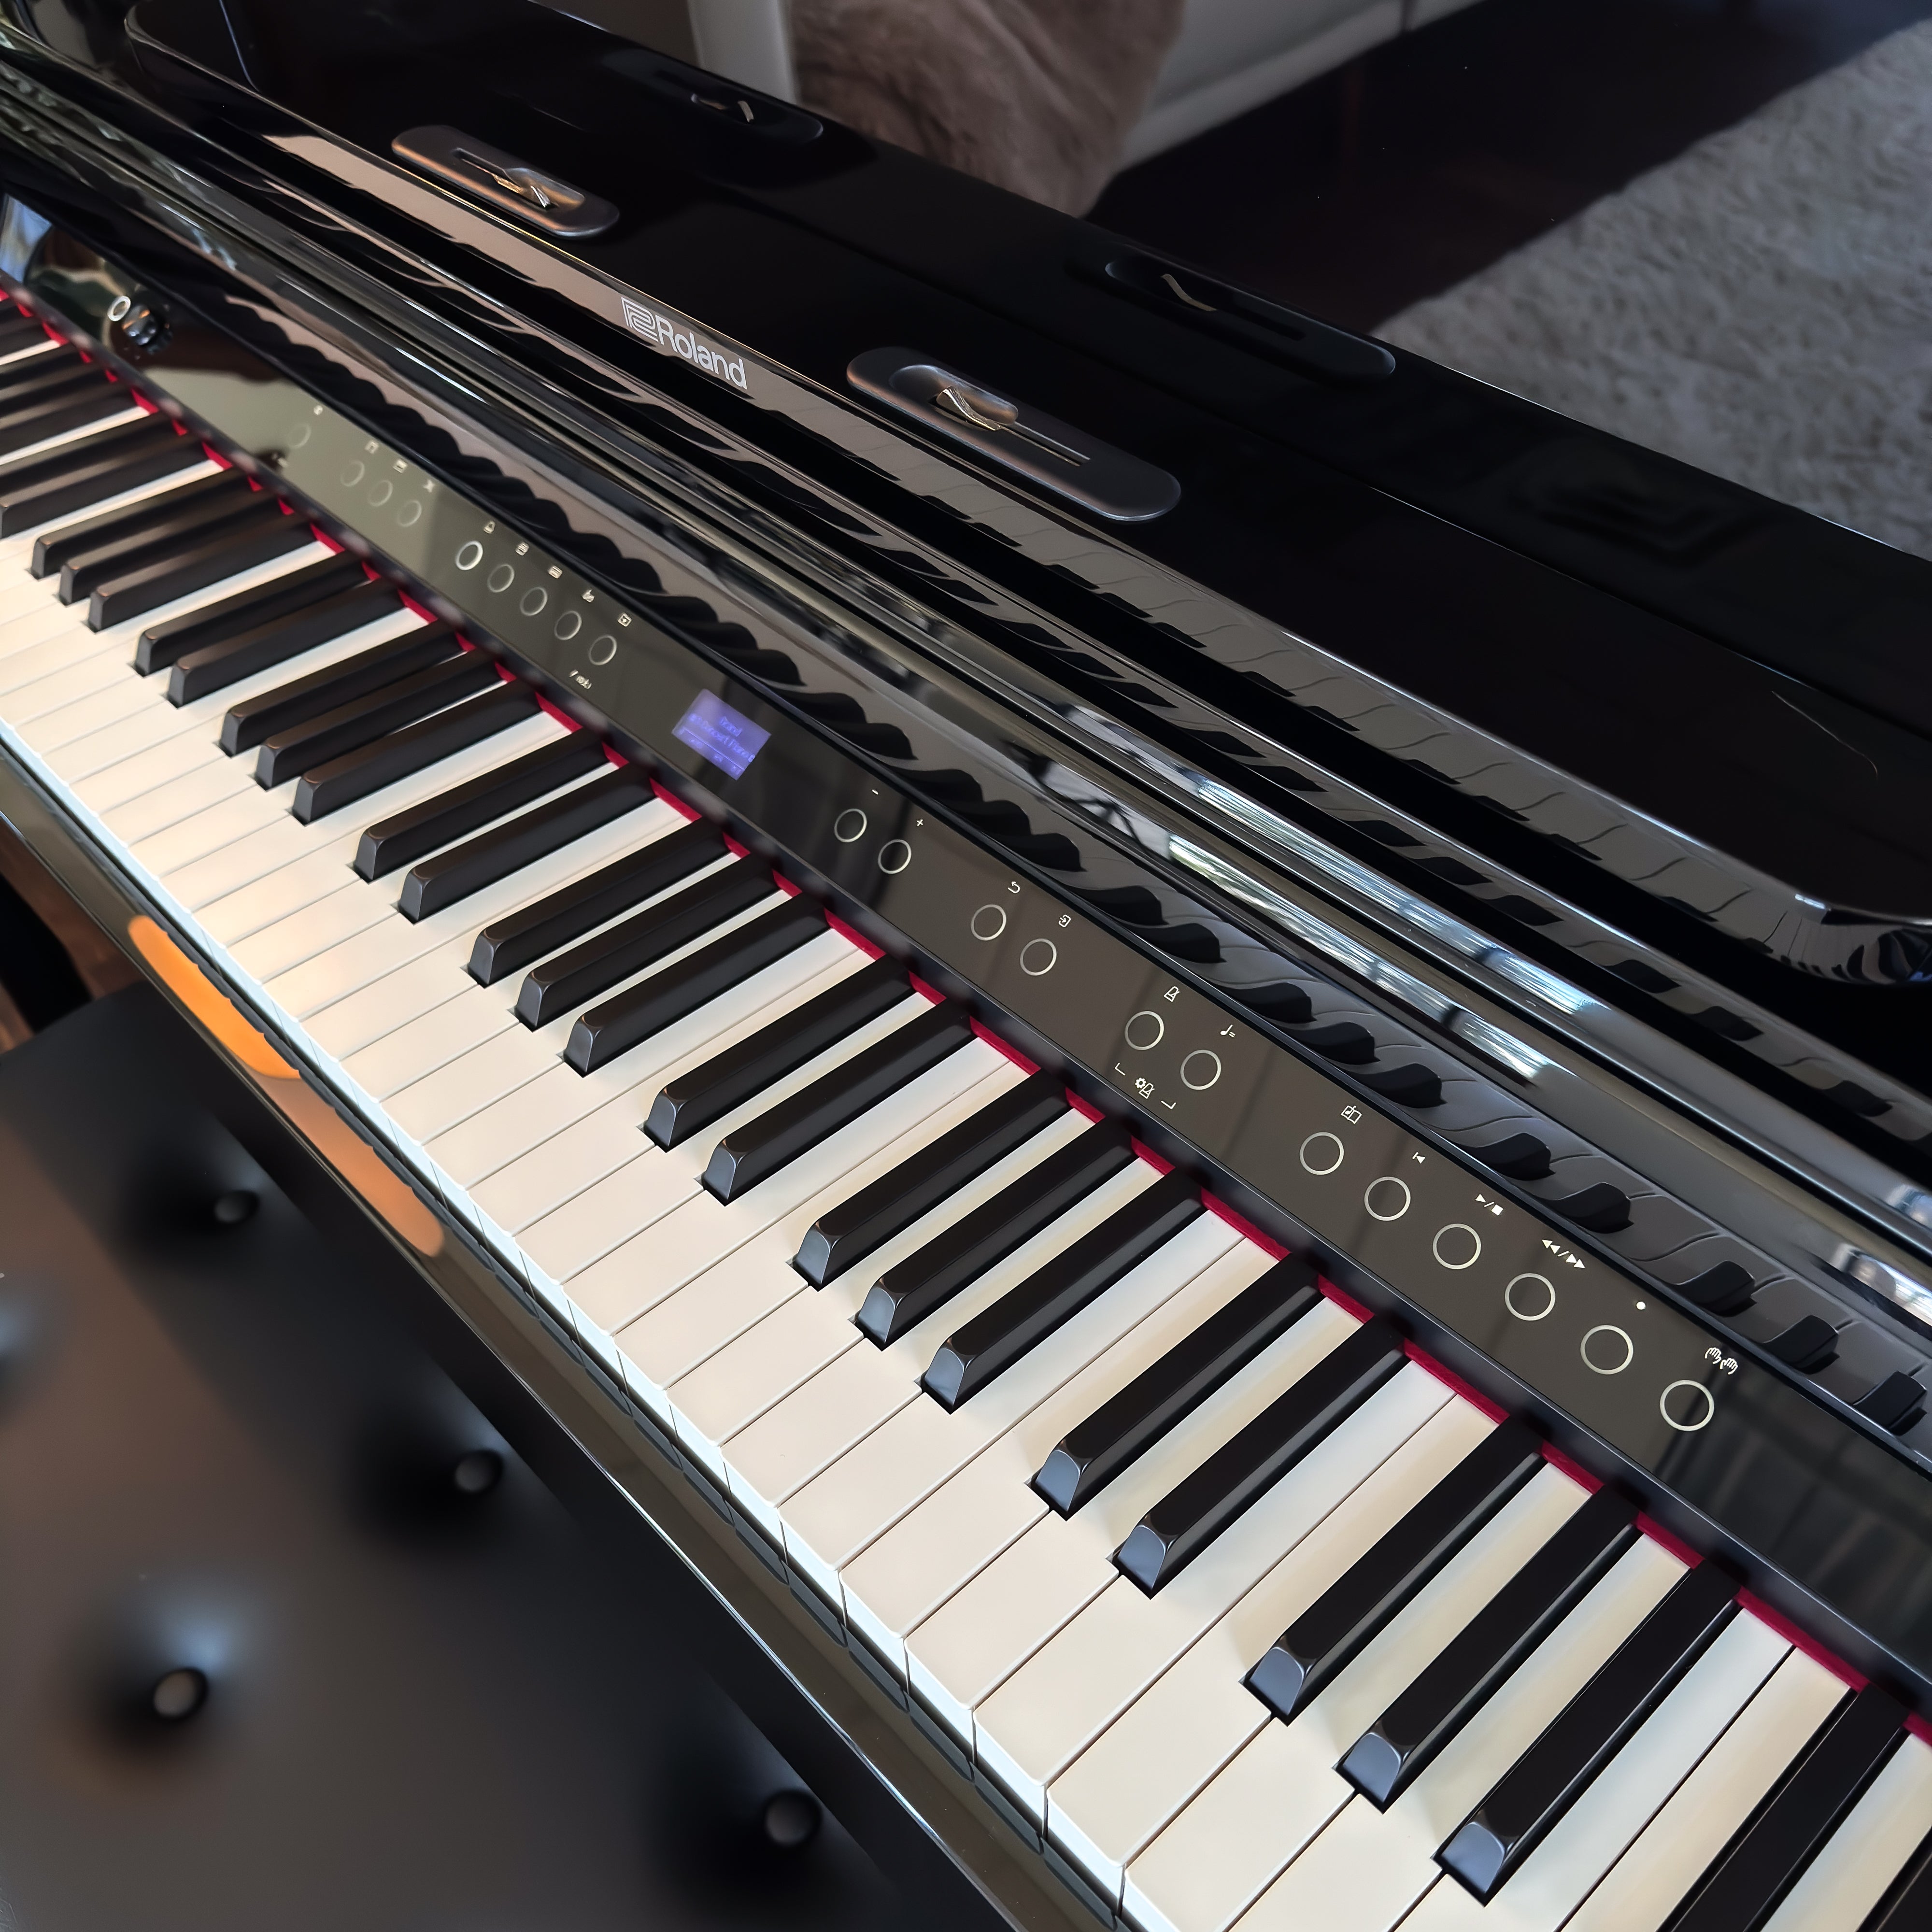 Roland LX-6 Digital Piano with Bench - Polished Ebony, View 2